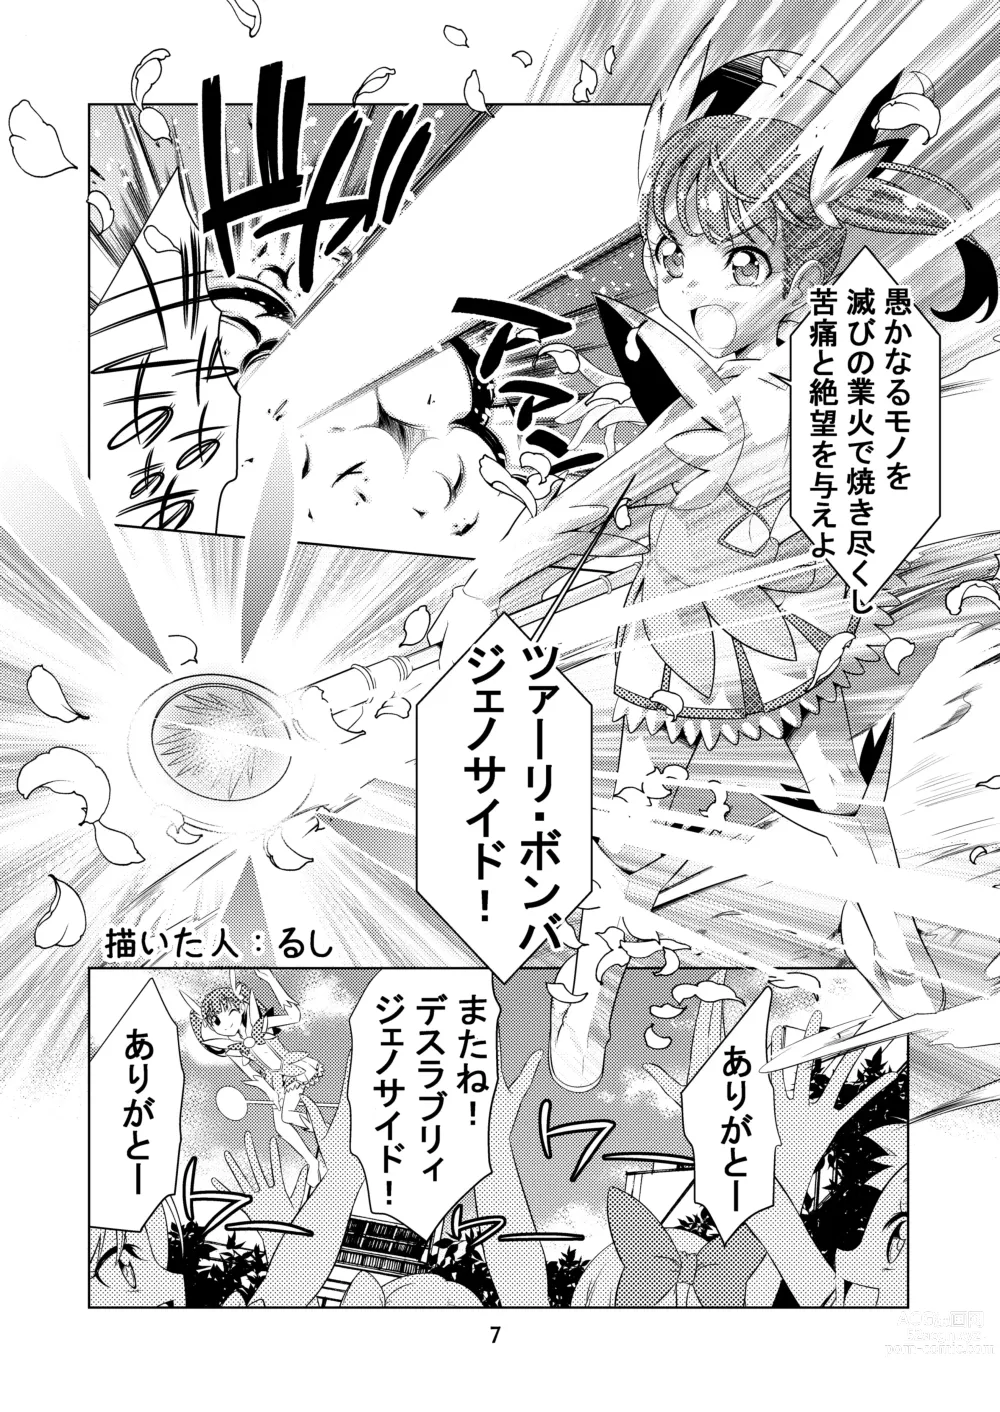 Page 6 of doujinshi PeeGirlsIZM02